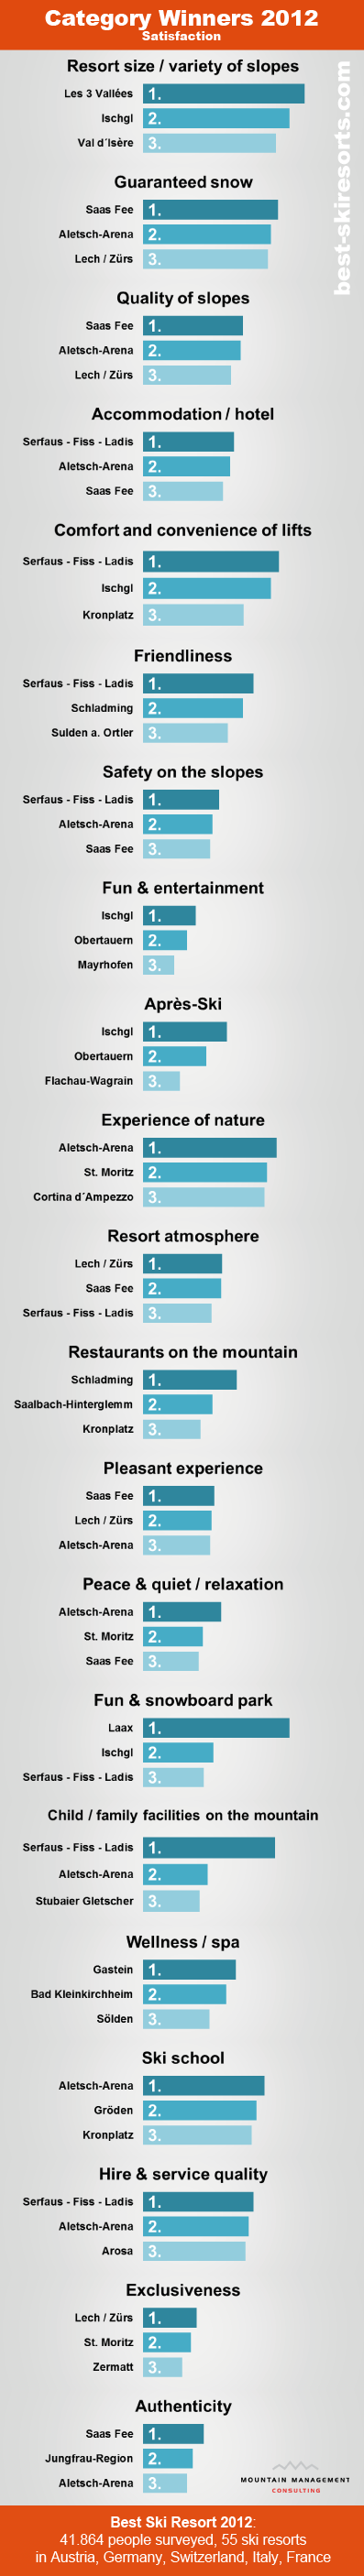 The top 3 ski resorts in satisfaction in 21 categories